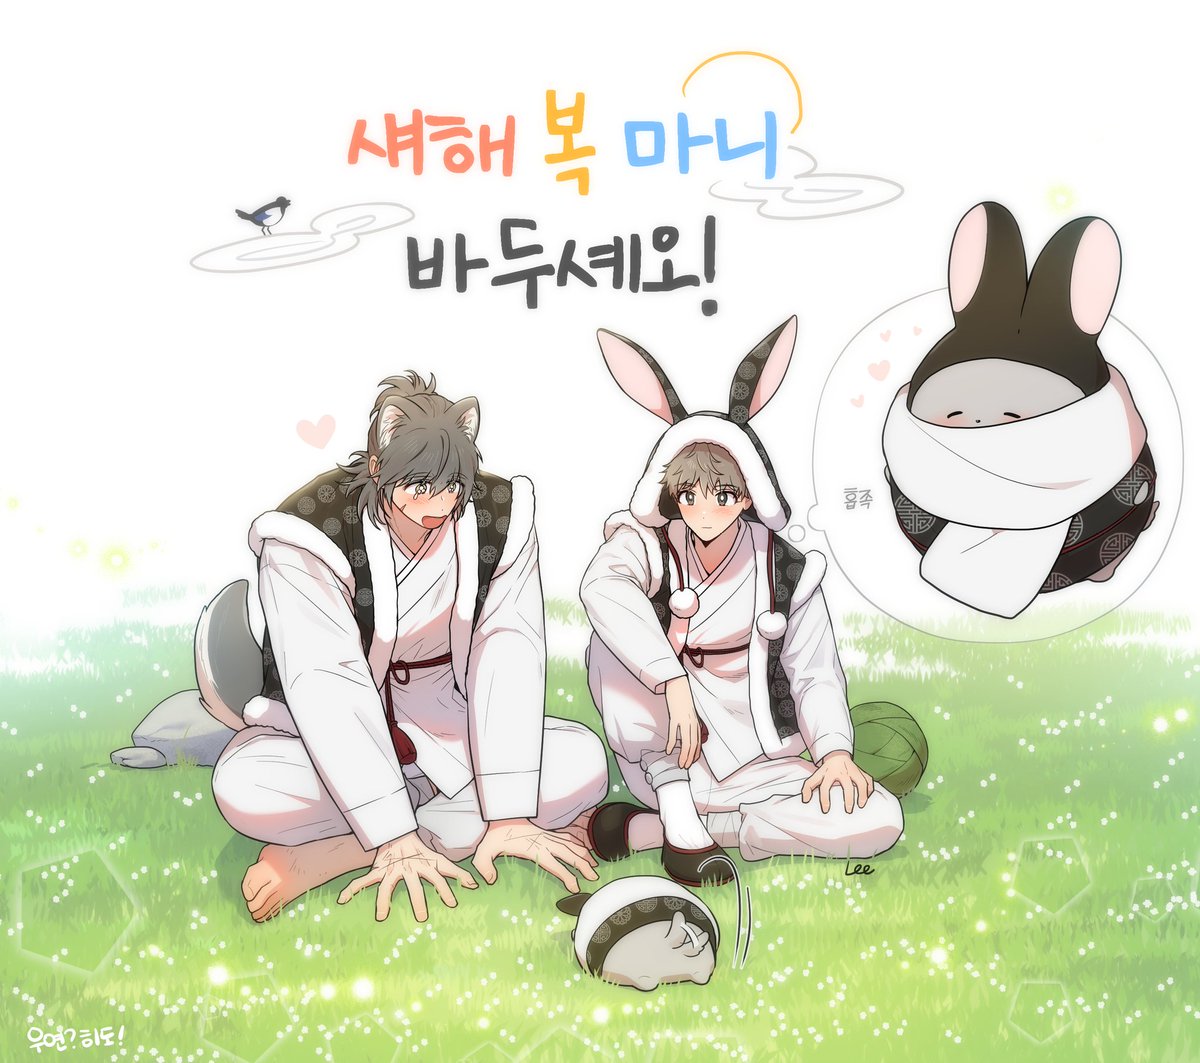 korean text animal ears multiple boys 2boys male focus sitting rabbit ears  illustration images